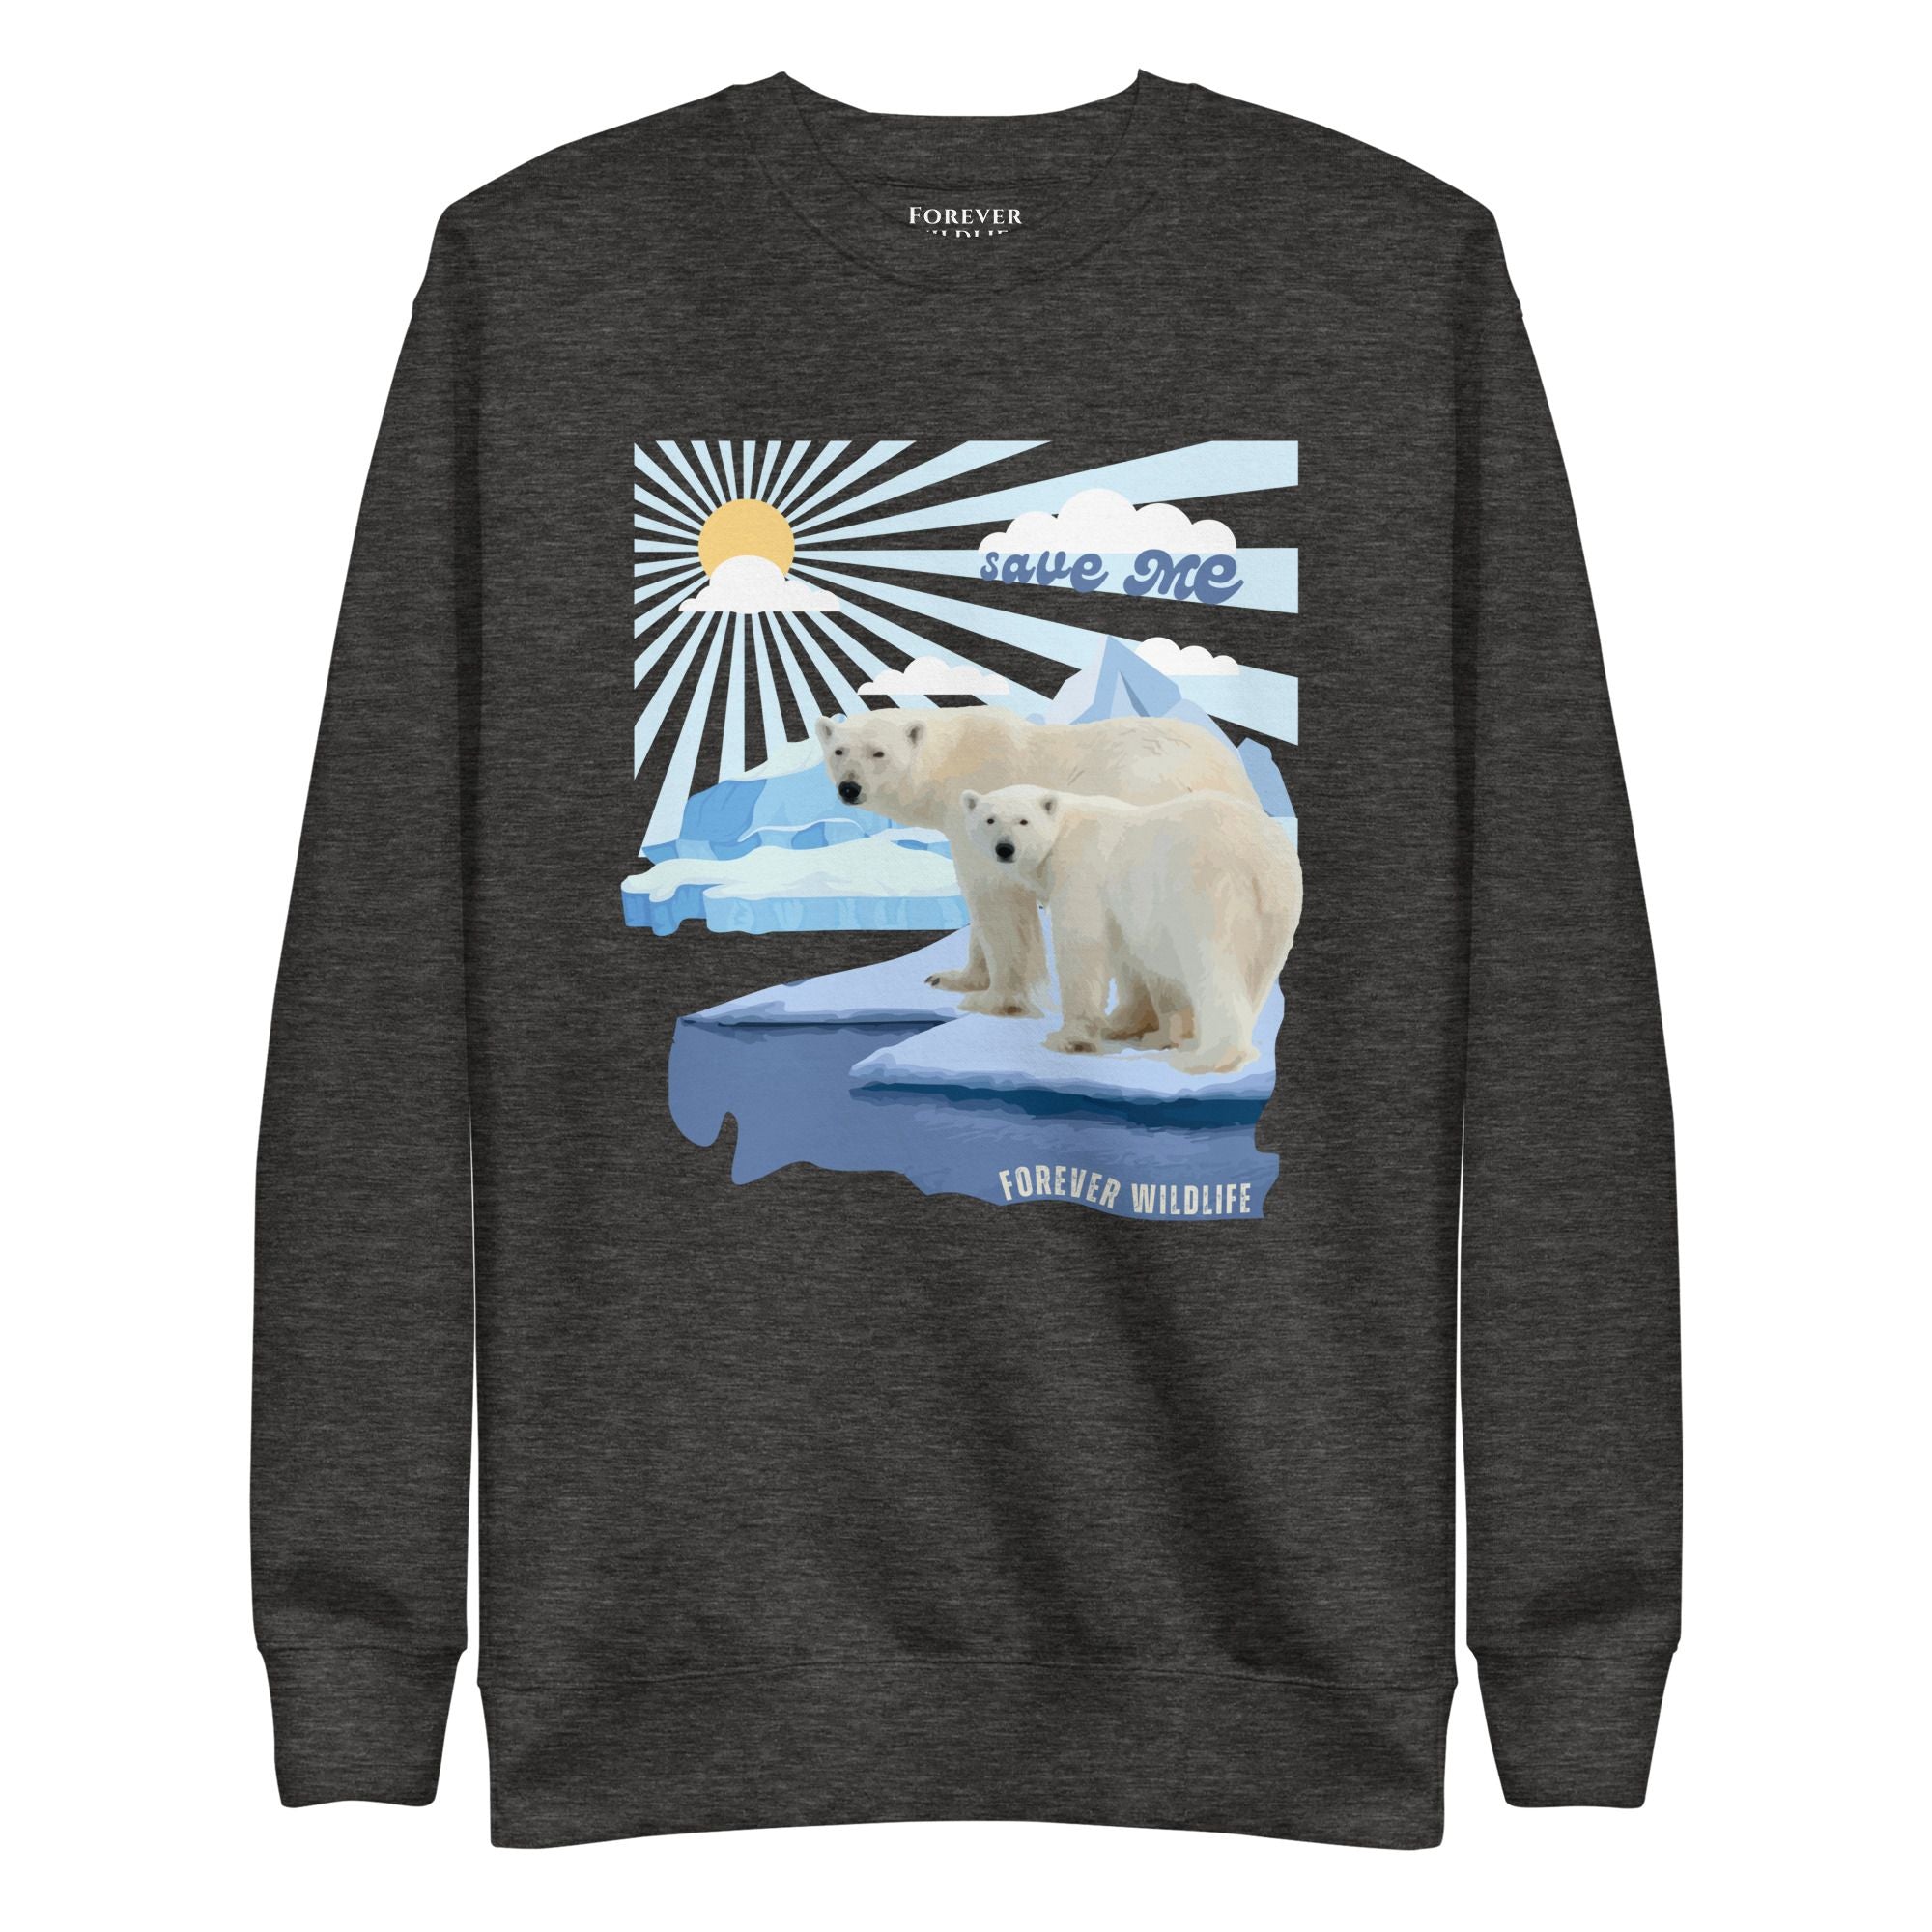 Polar Bears Sweatshirt in Charcoal Grey-Premium Wildlife Animal Inspiration Sweatshirt Design with 'Save Me' text, part of Wildlife Sweatshirts & Clothing from Forever Wildlife.